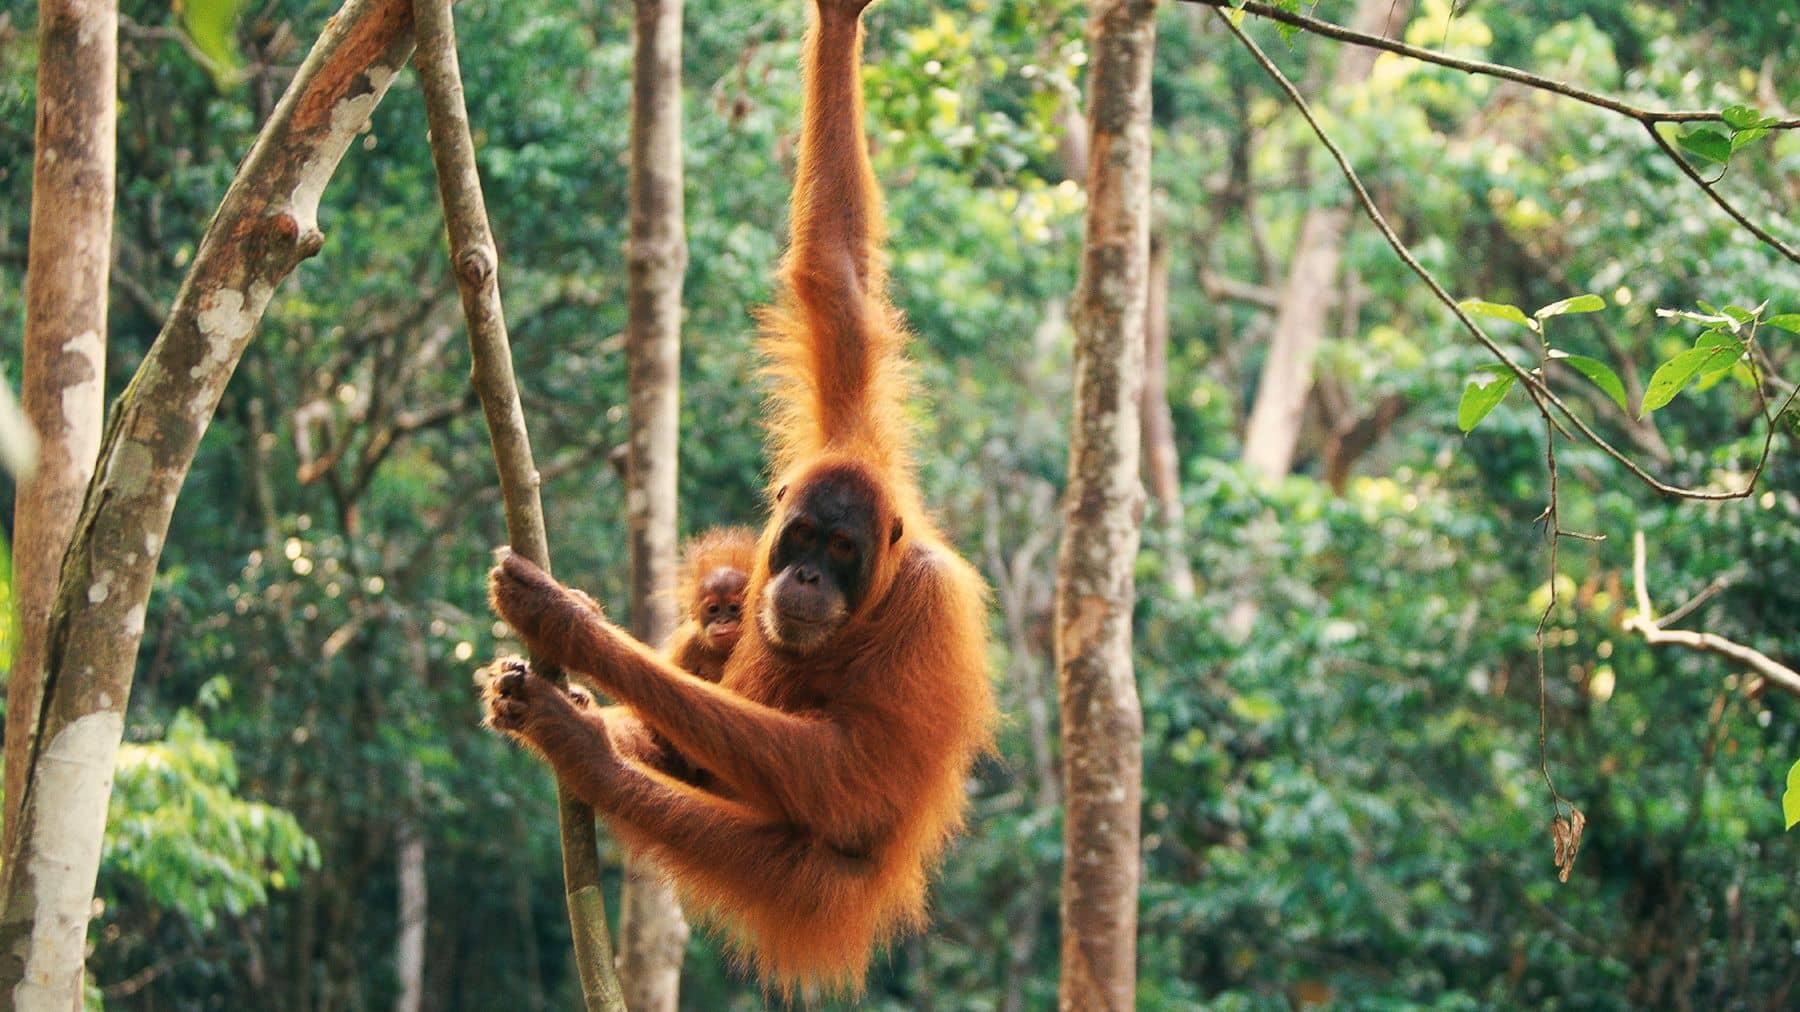 Orangutans at the Singapore Zoo